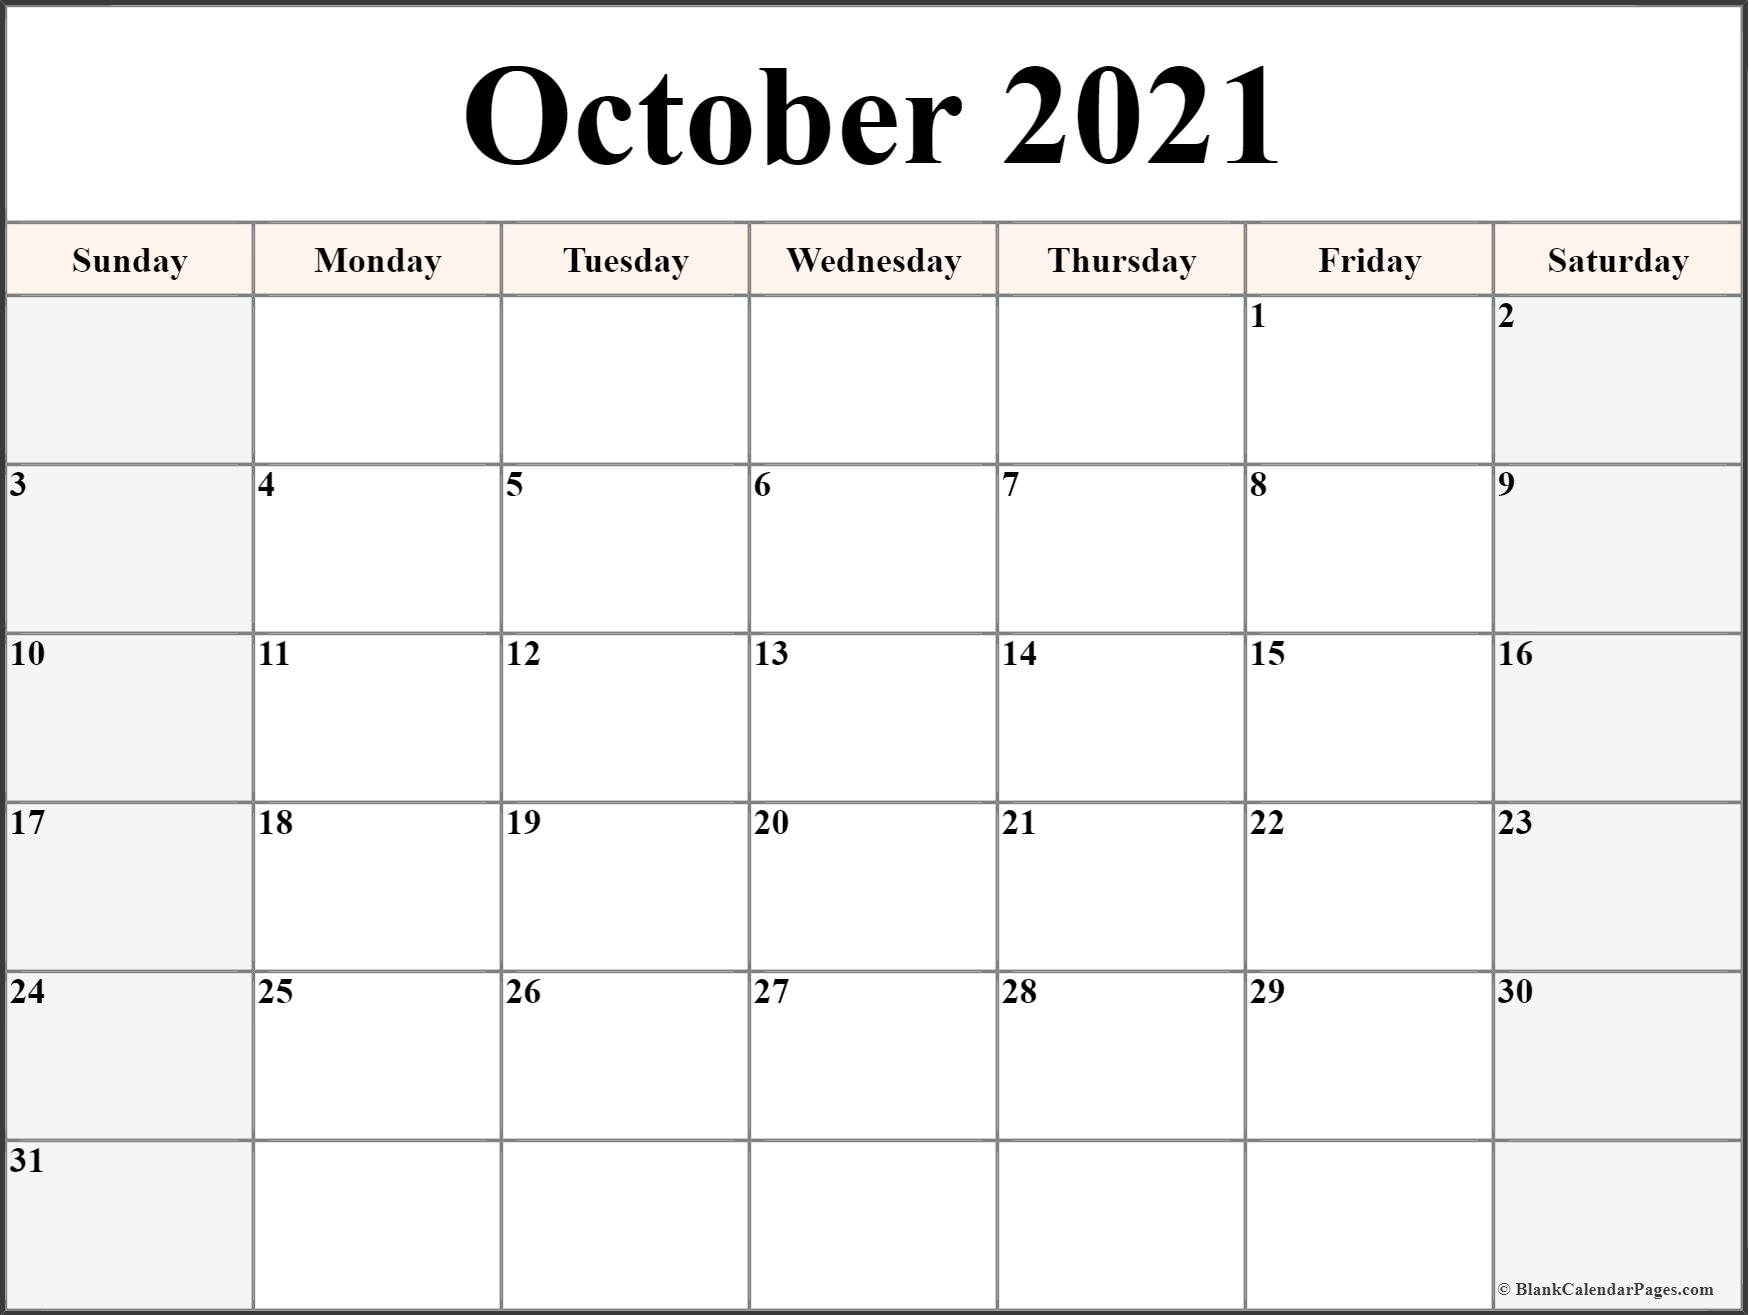 October 2021 Calendar | Free Printable Calendar Templates-Printable Bill Calendar 2021 Monthly